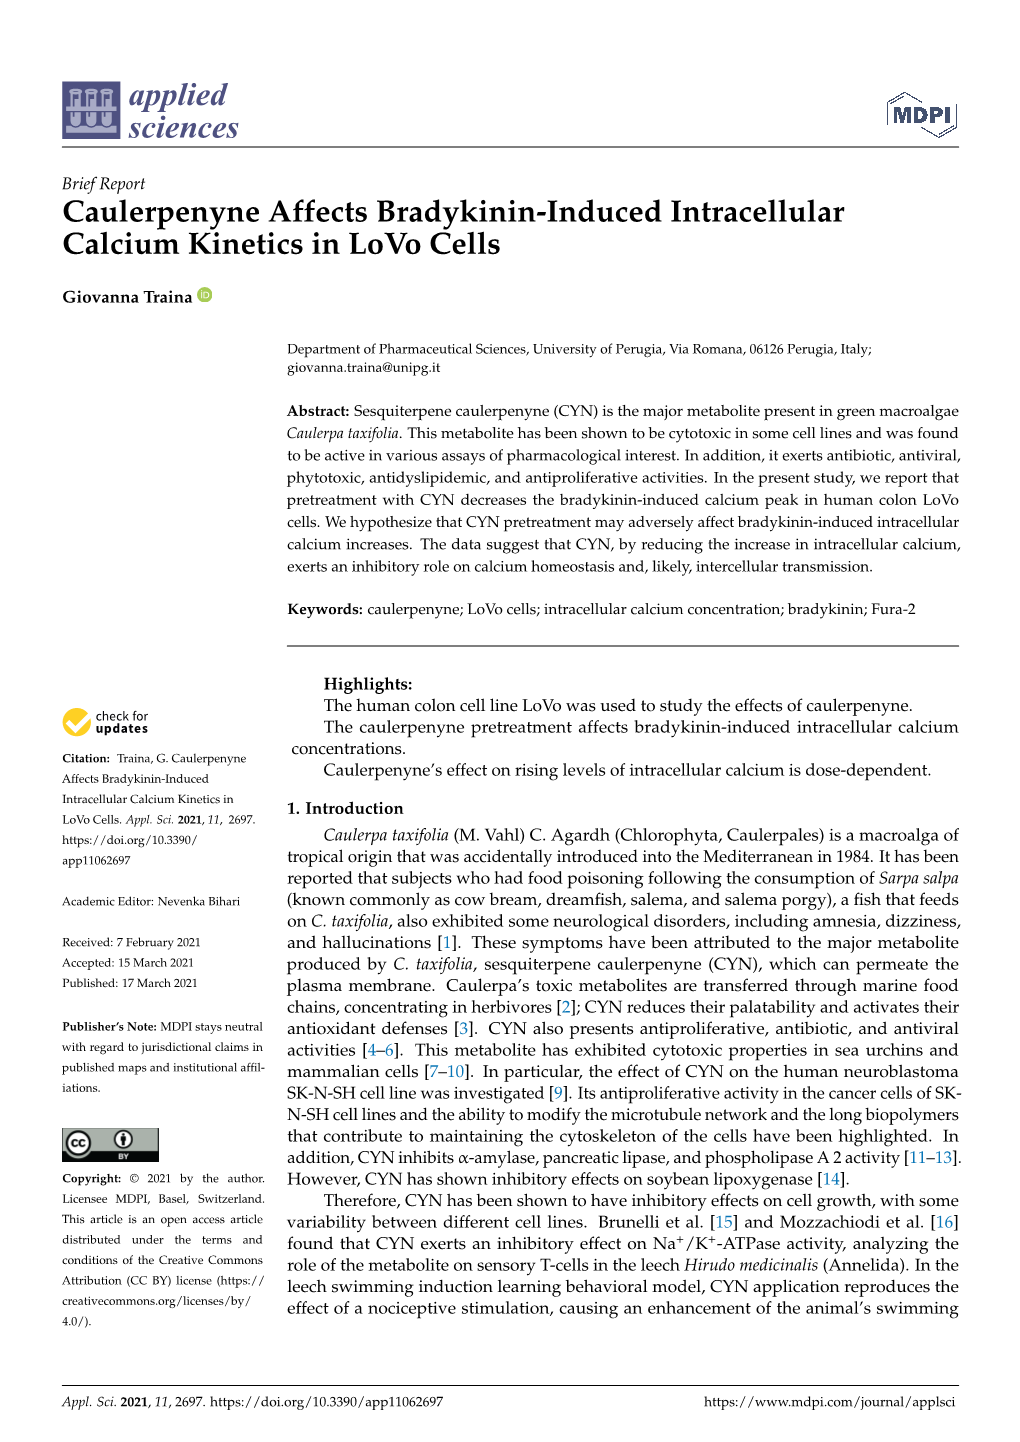 Caulerpenyne Affects Bradykinin-Induced Intracellular Calcium Kinetics in Lovo Cells